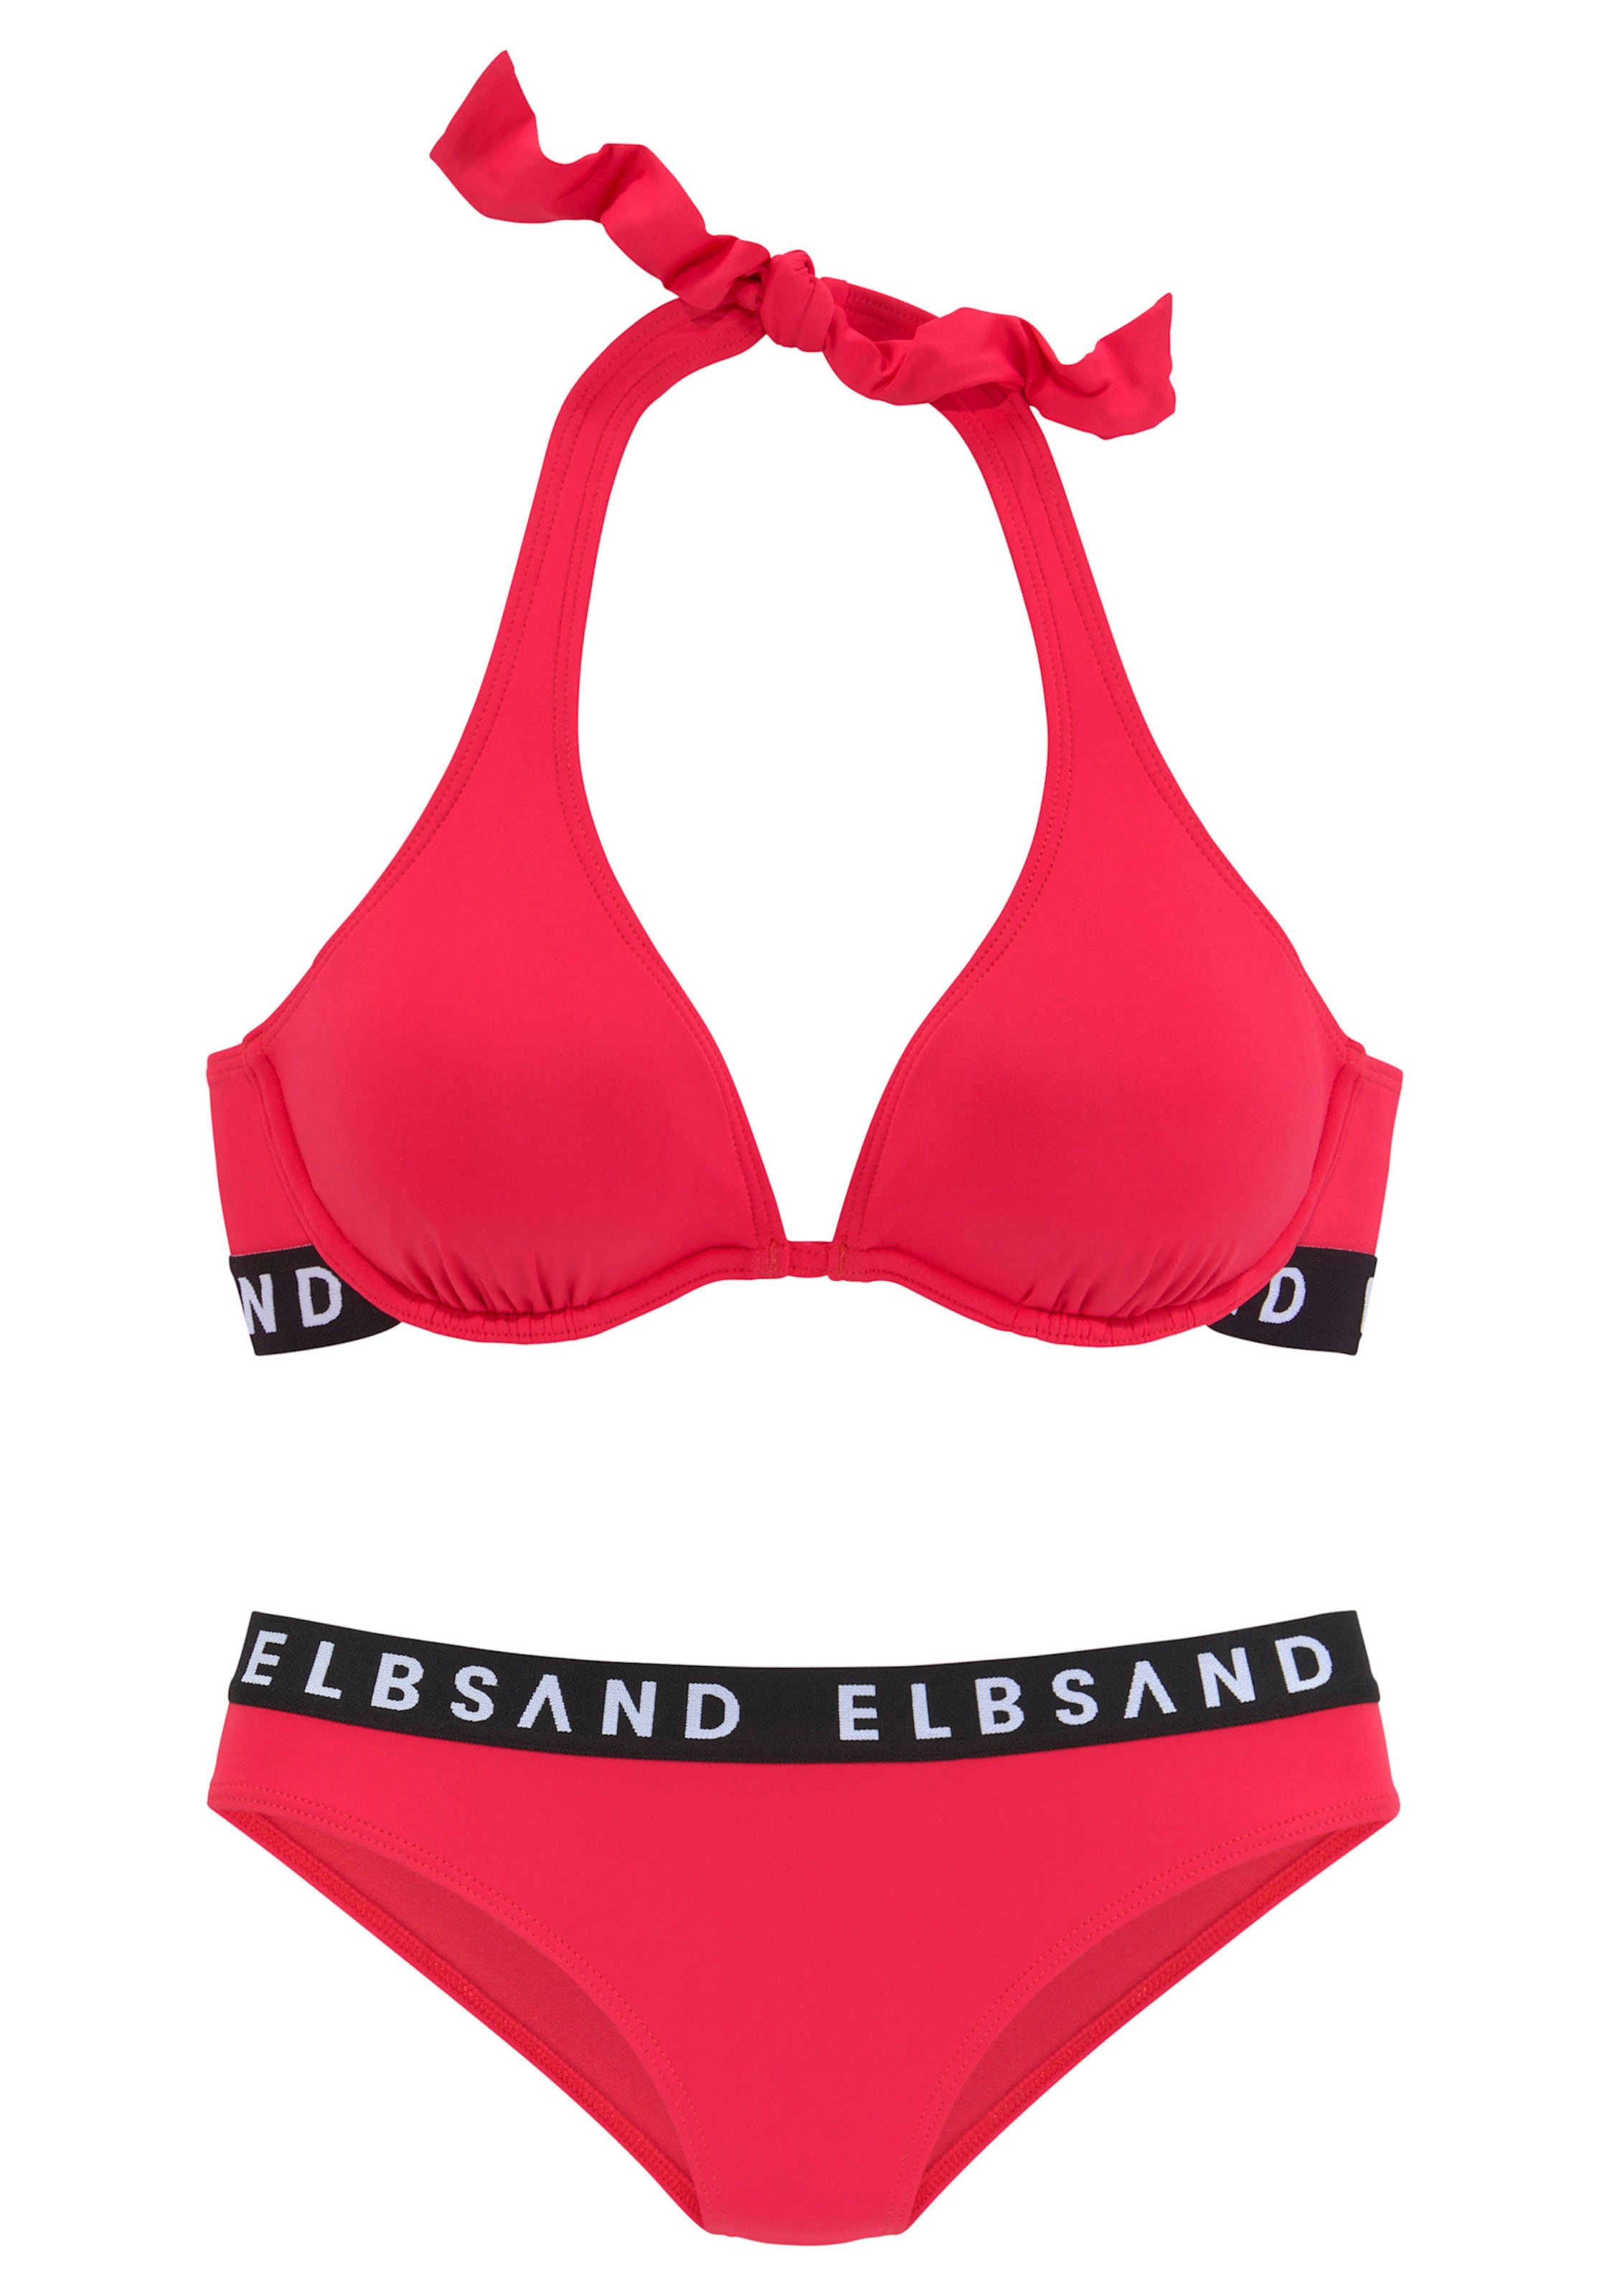 HR Sport günstig Kaufen-Bügel-Bikini in rot von Elbsand. Bügel-Bikini in rot von Elbsand <![CDATA[Sportiver Bügel-Bikini von Elbsand mit modischem Logoschriftzug. Cups herausnehmbar. Praktisch: Rückenverschluss. Bikinihose leicht höher geschnitten. Perfekt für Urla